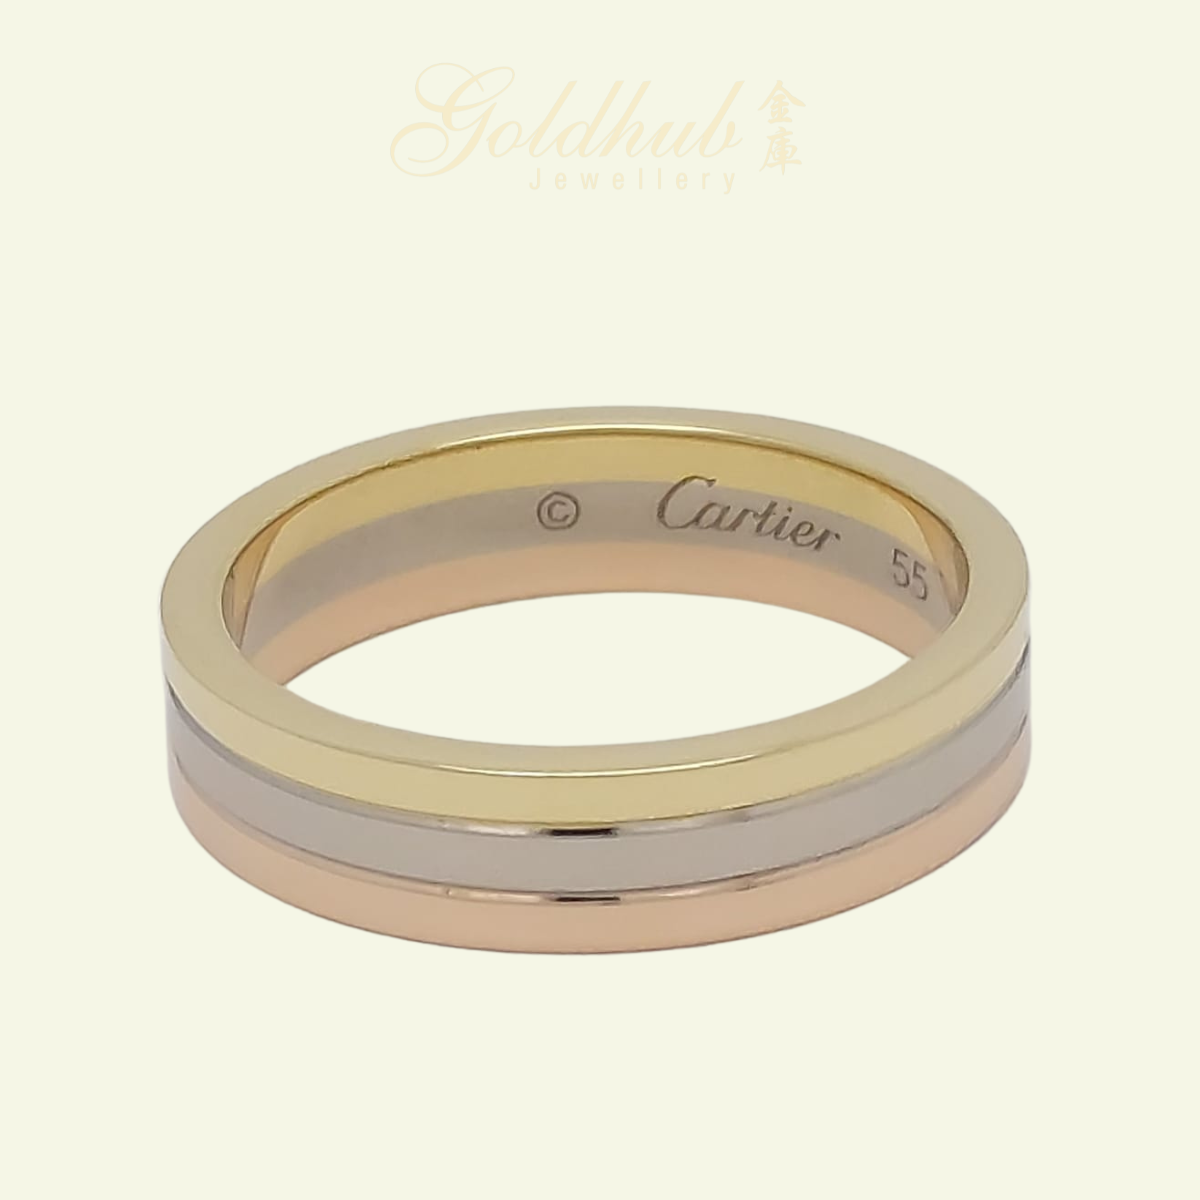 [RELOCATION SALES] 18k Pre-loved Vendome Louis Cartier Ring in Tri-colour Gold